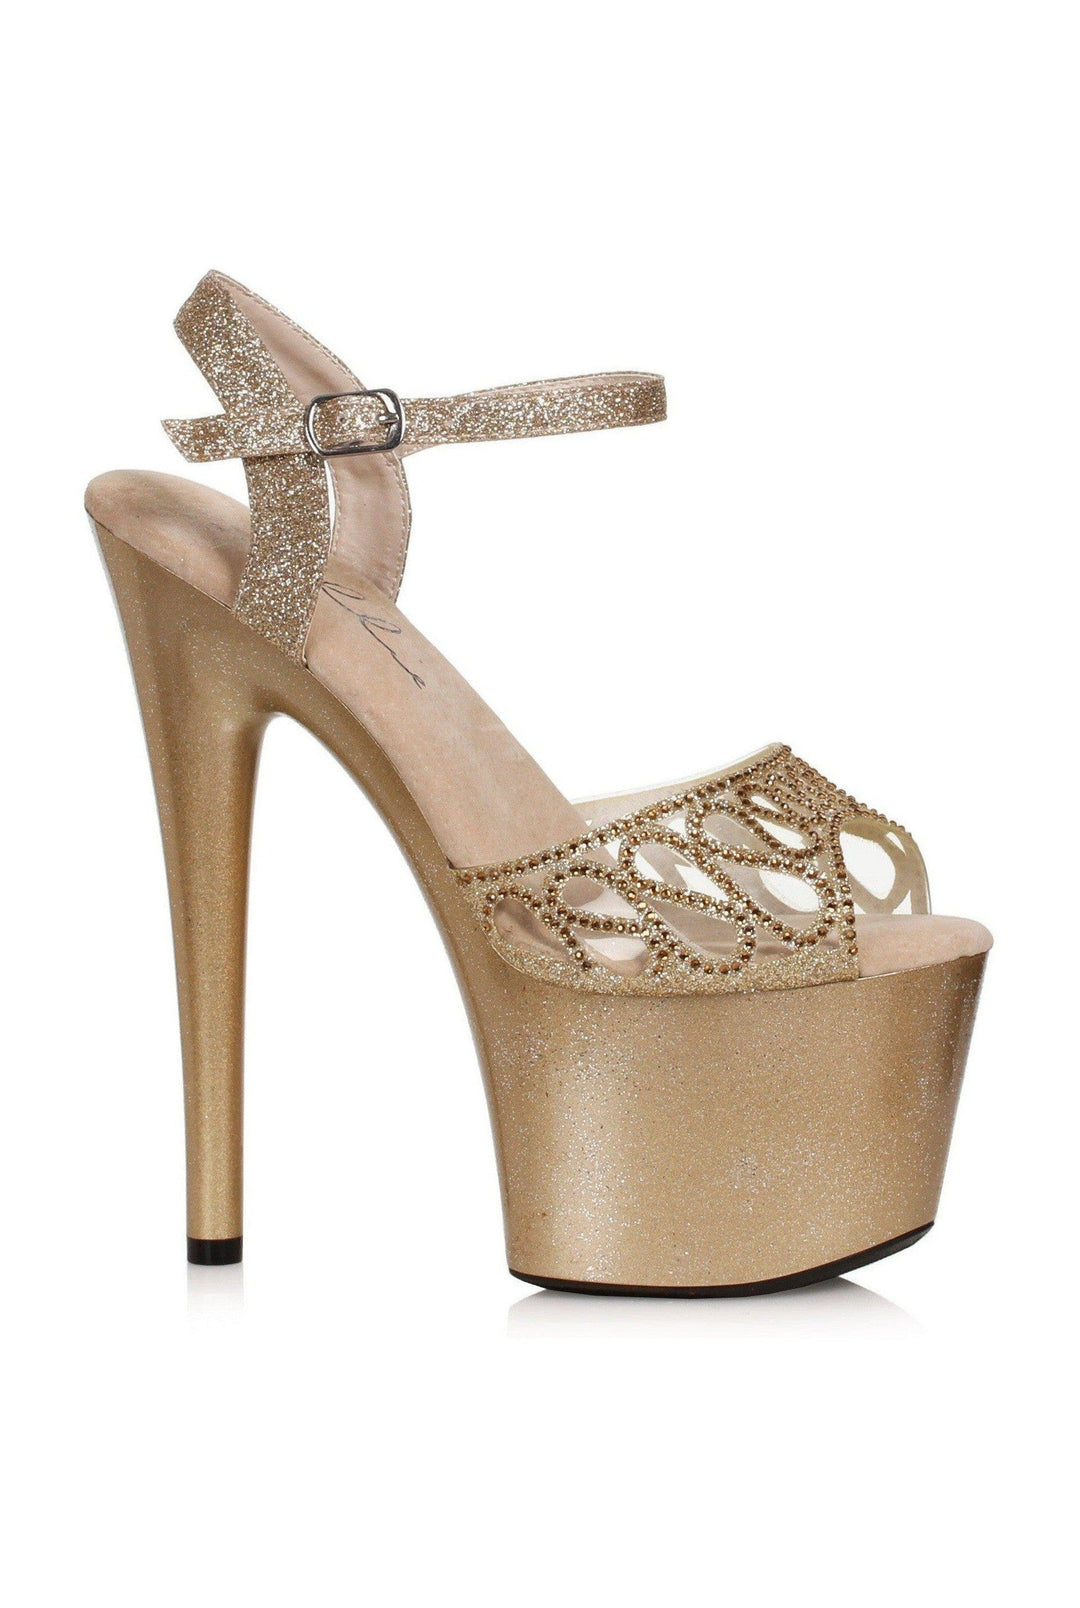 Ellie Shoes Gold Sandals Platform Stripper Shoes | Buy at Sexyshoes.com